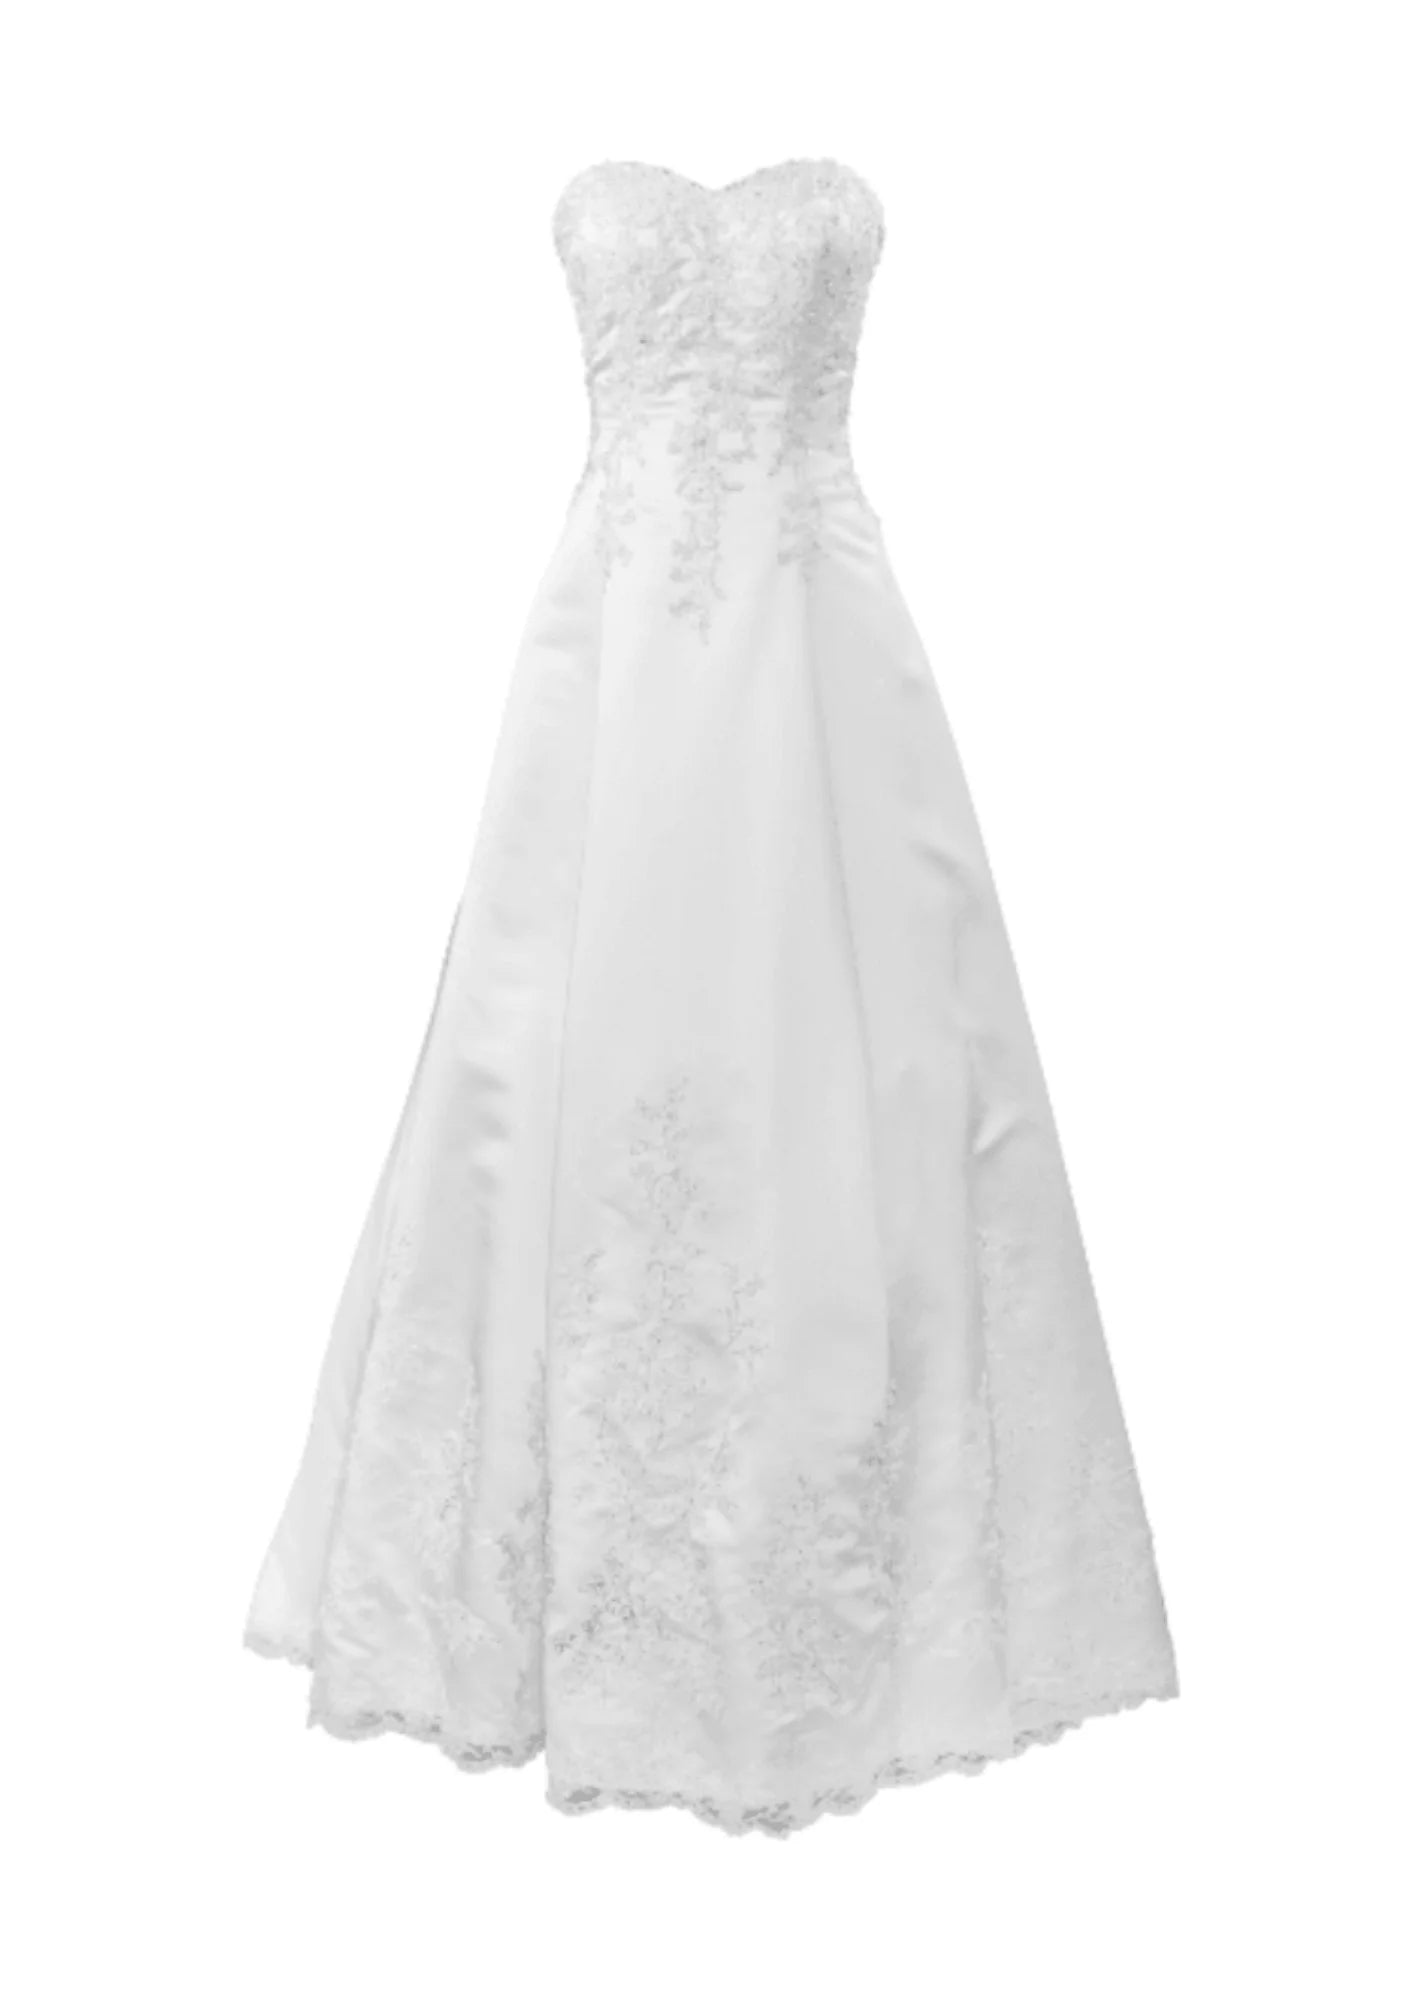 STRAPLESS WEDDING DRESS